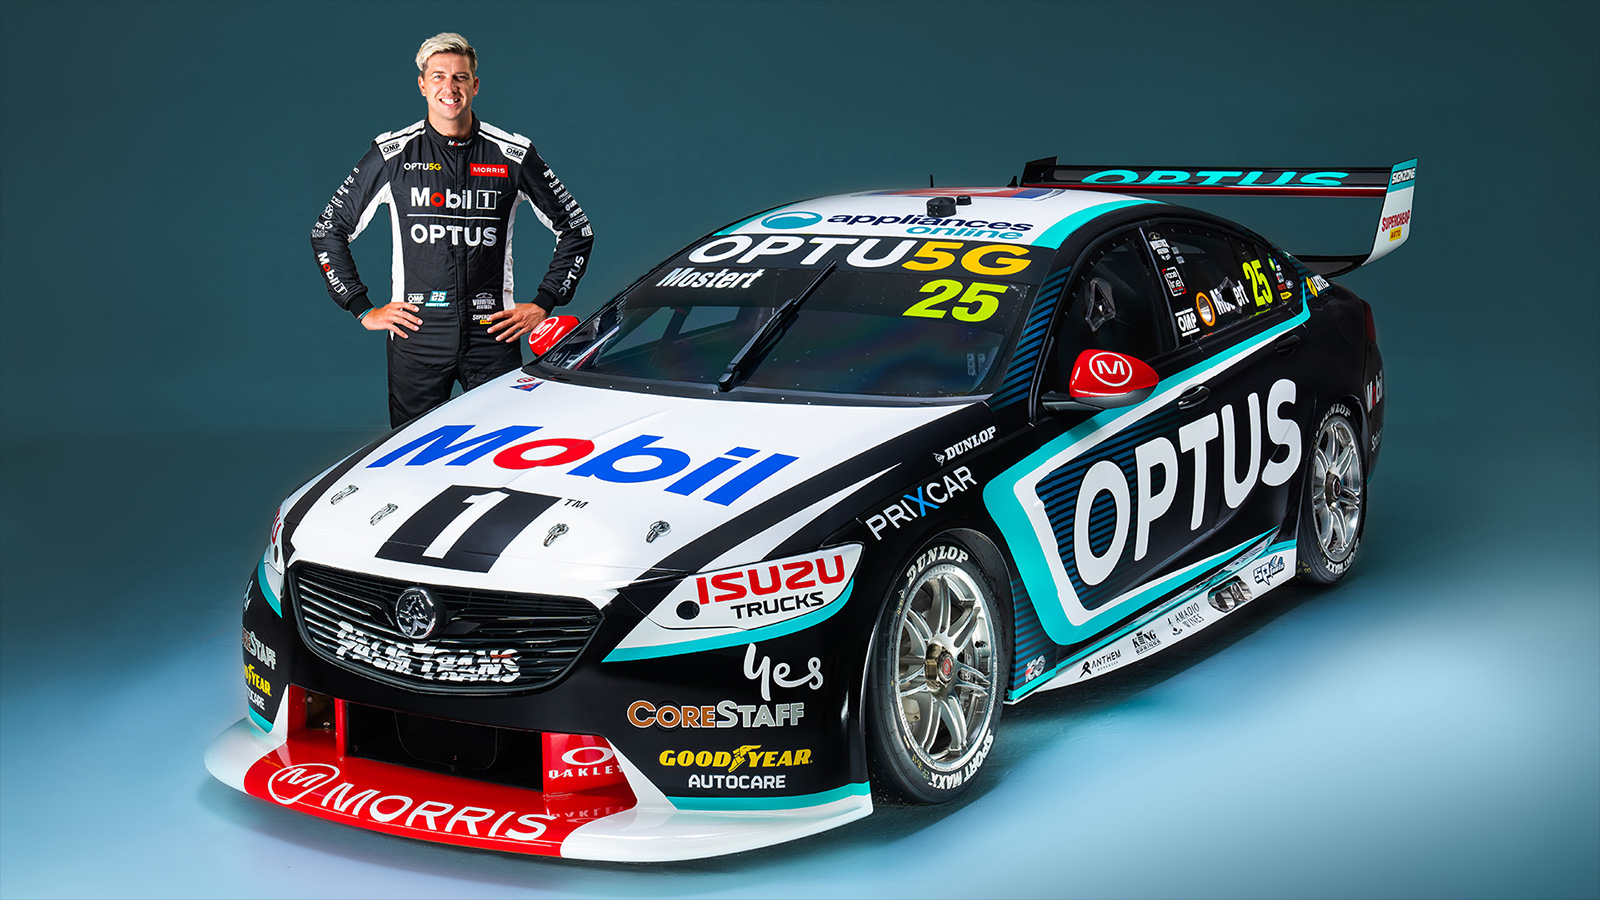 Mobil 1™ Optus Racing Launches